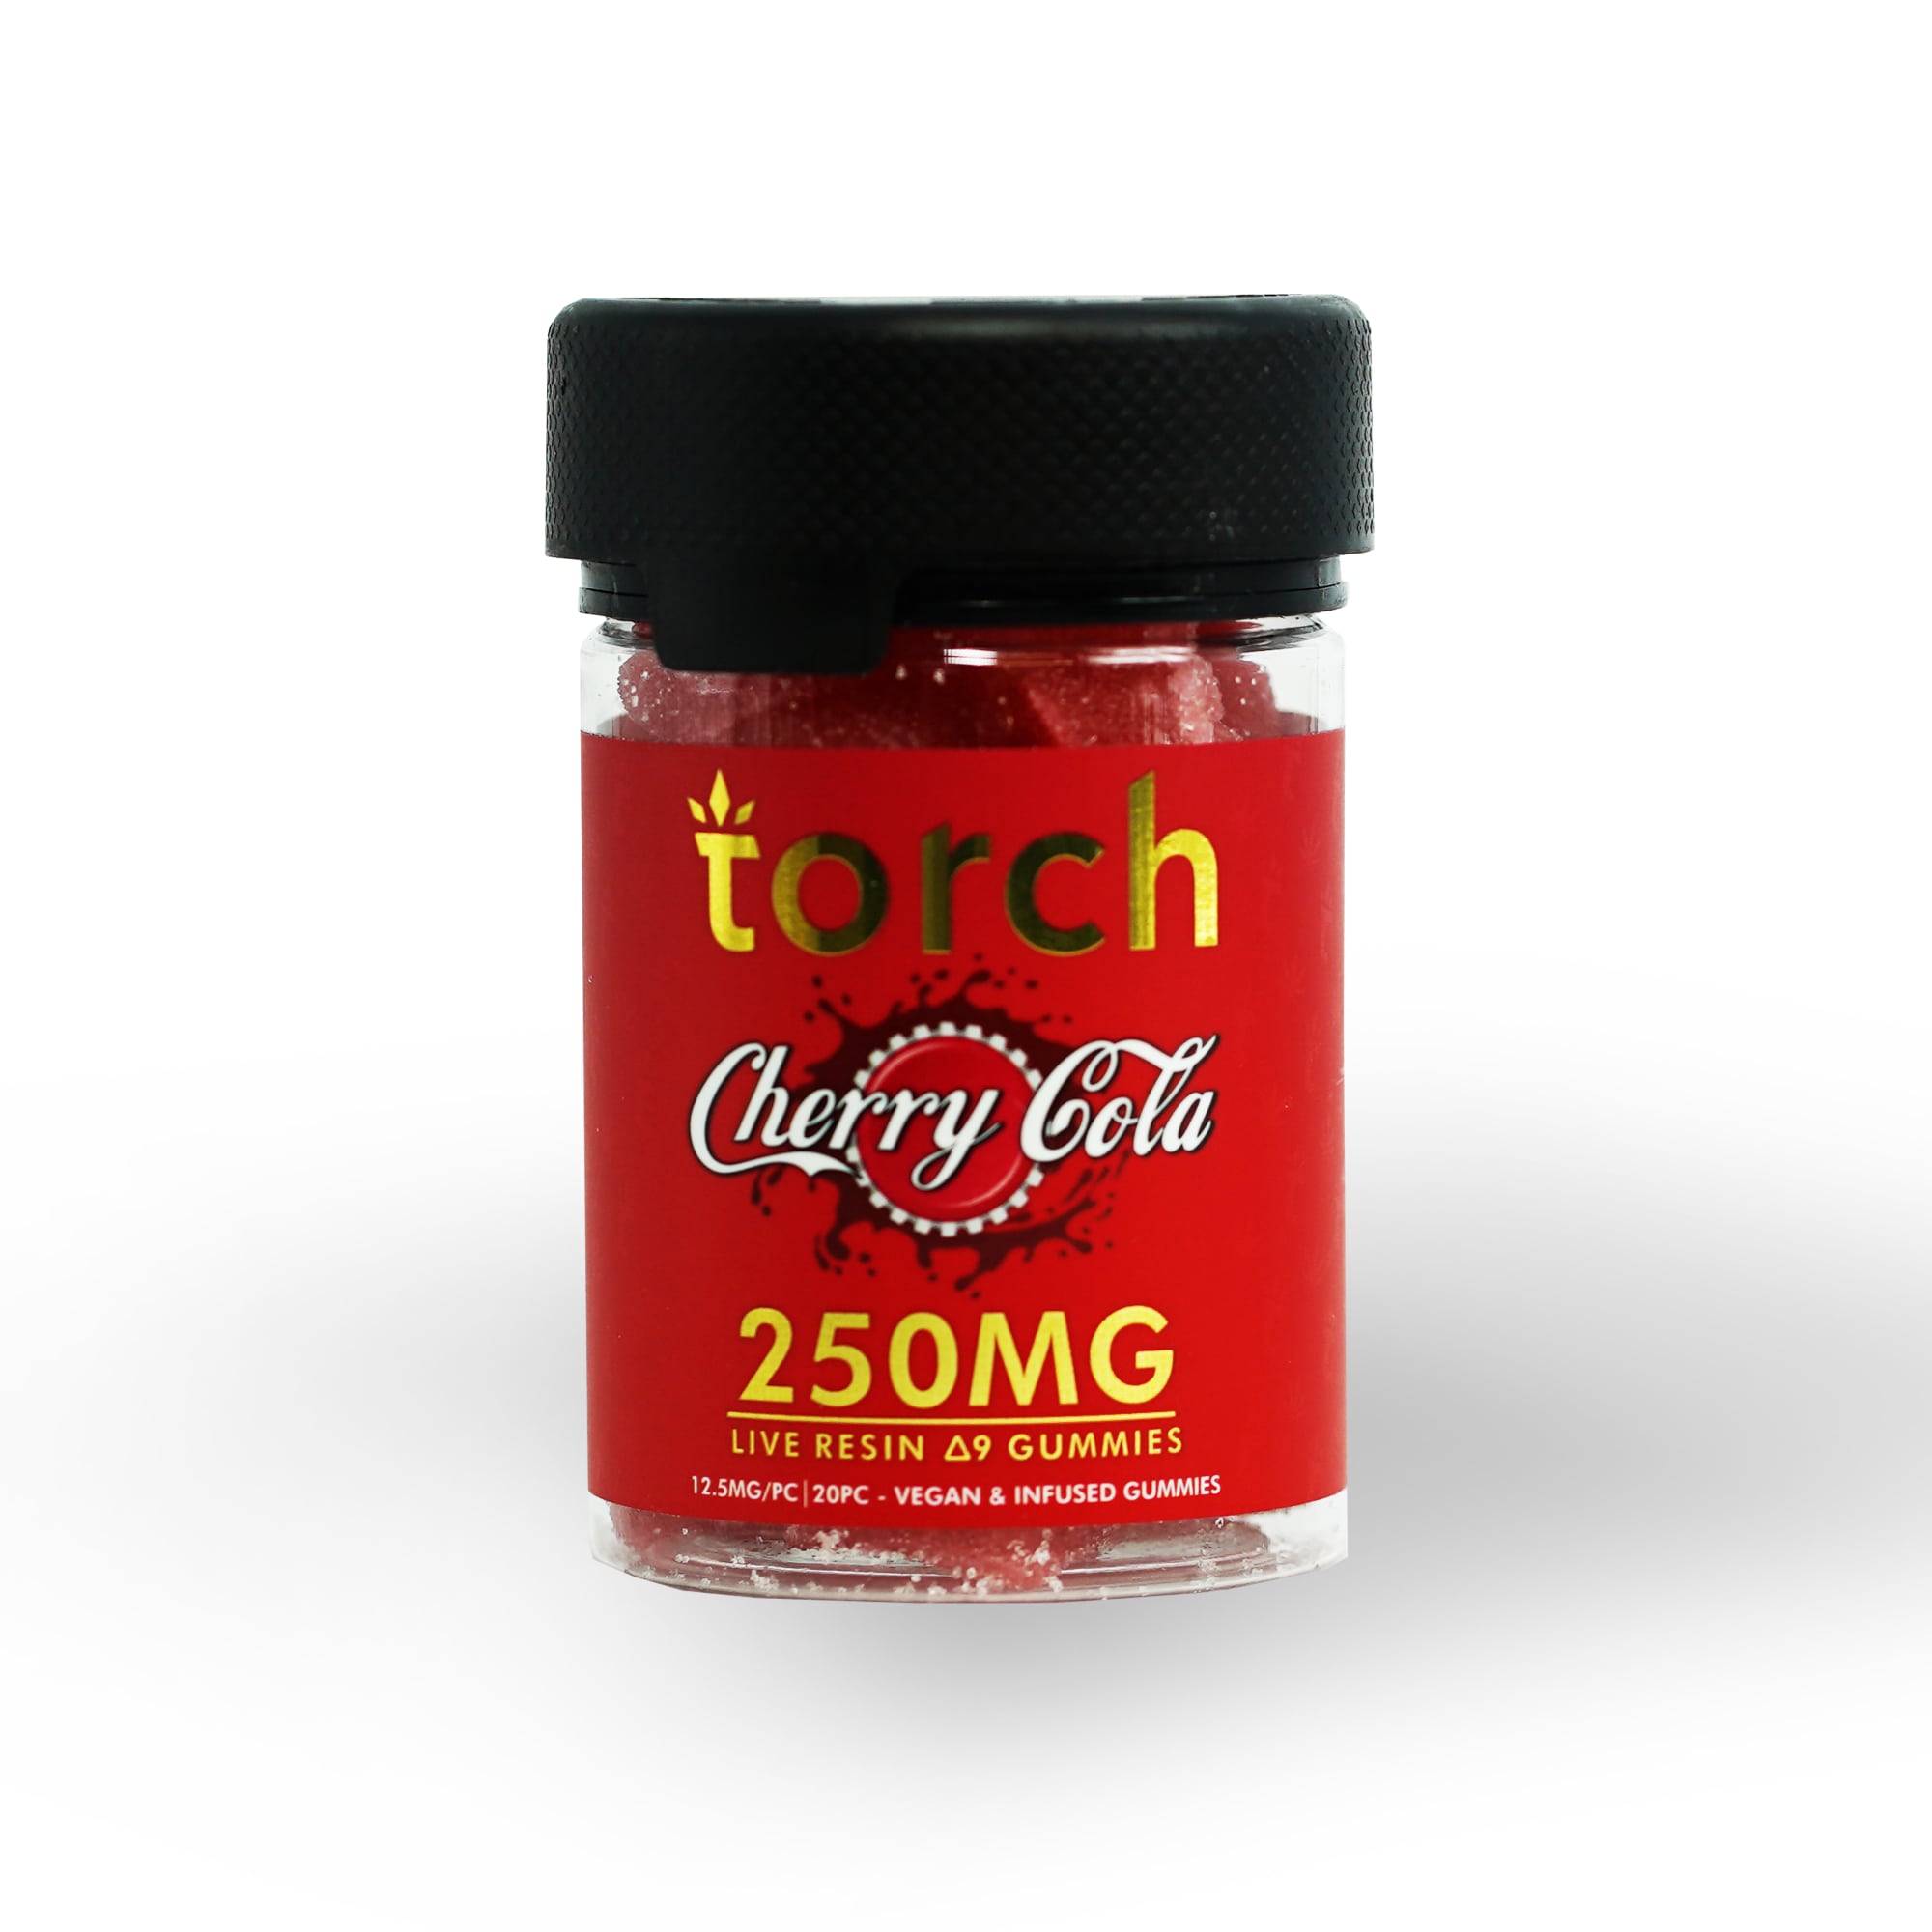 Torch Cherry Cola 12.5mg Live Resin Delta 9 Gummies (20pc) Best Price